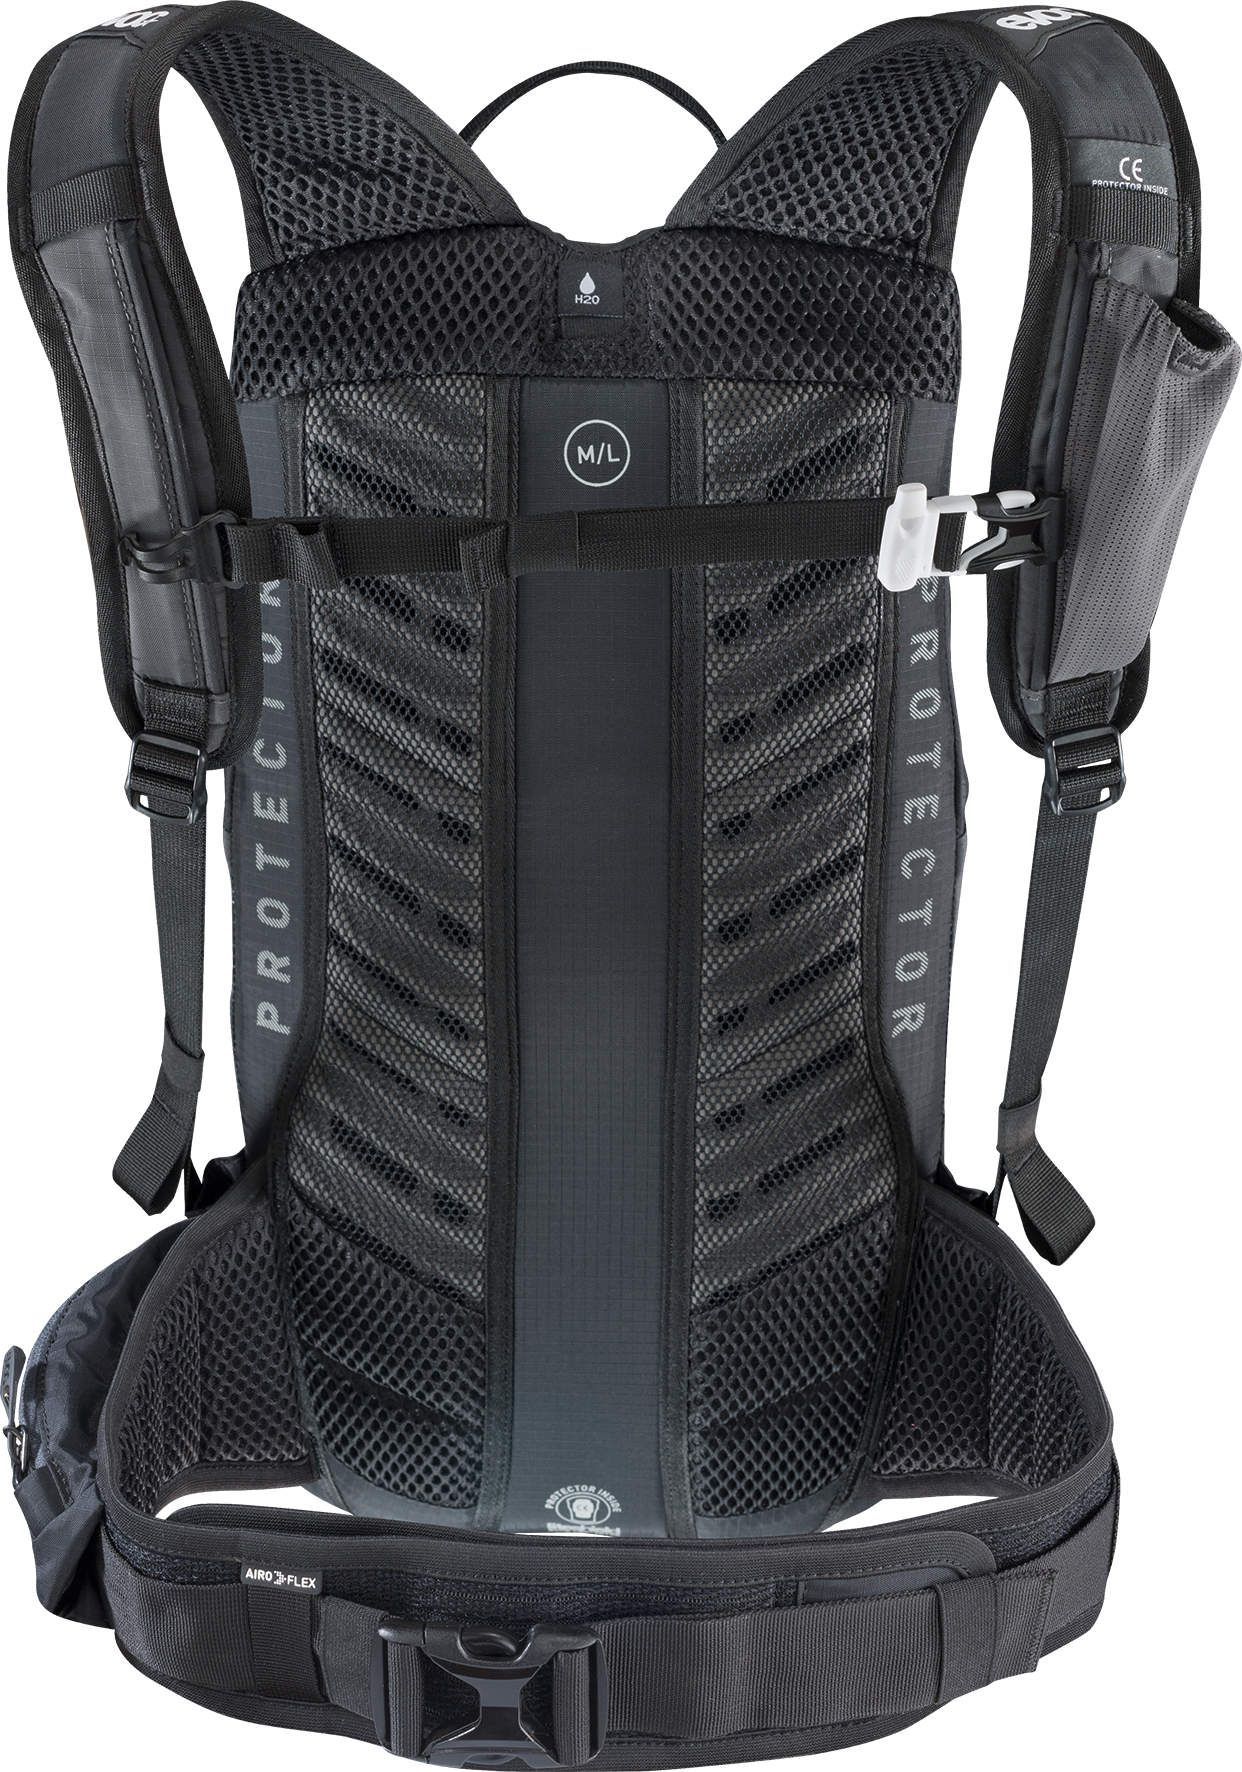 Lightweight racer backpack, HealthdesignShops